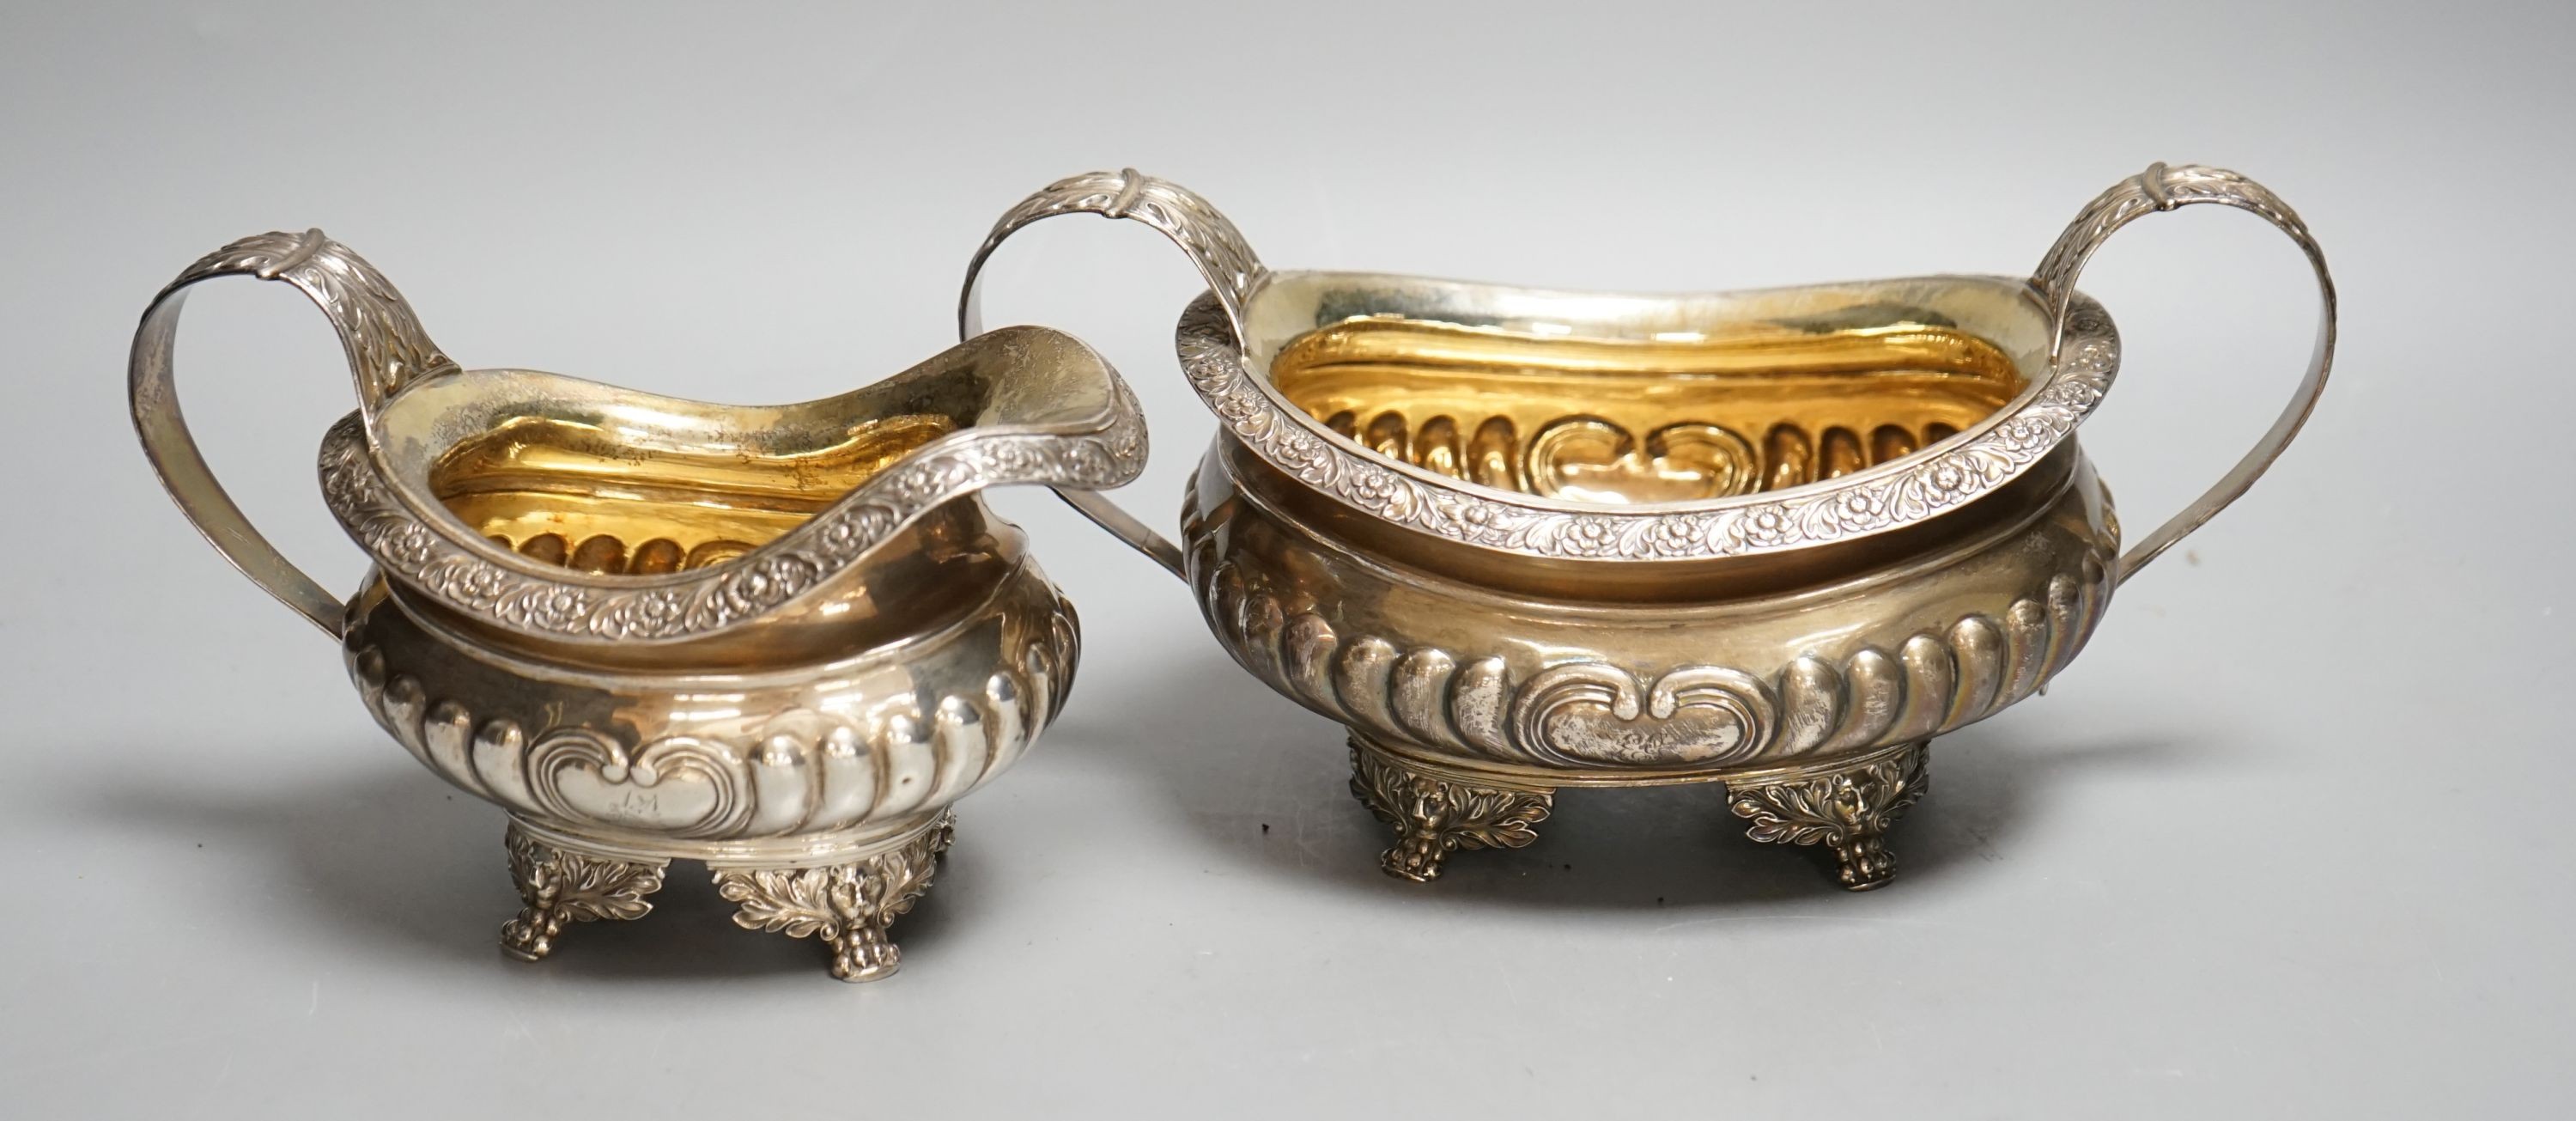 A late George III silver sugar bowl and cream jug, Robert Smeaton, Edinburgh, 1819, gross 19oz.